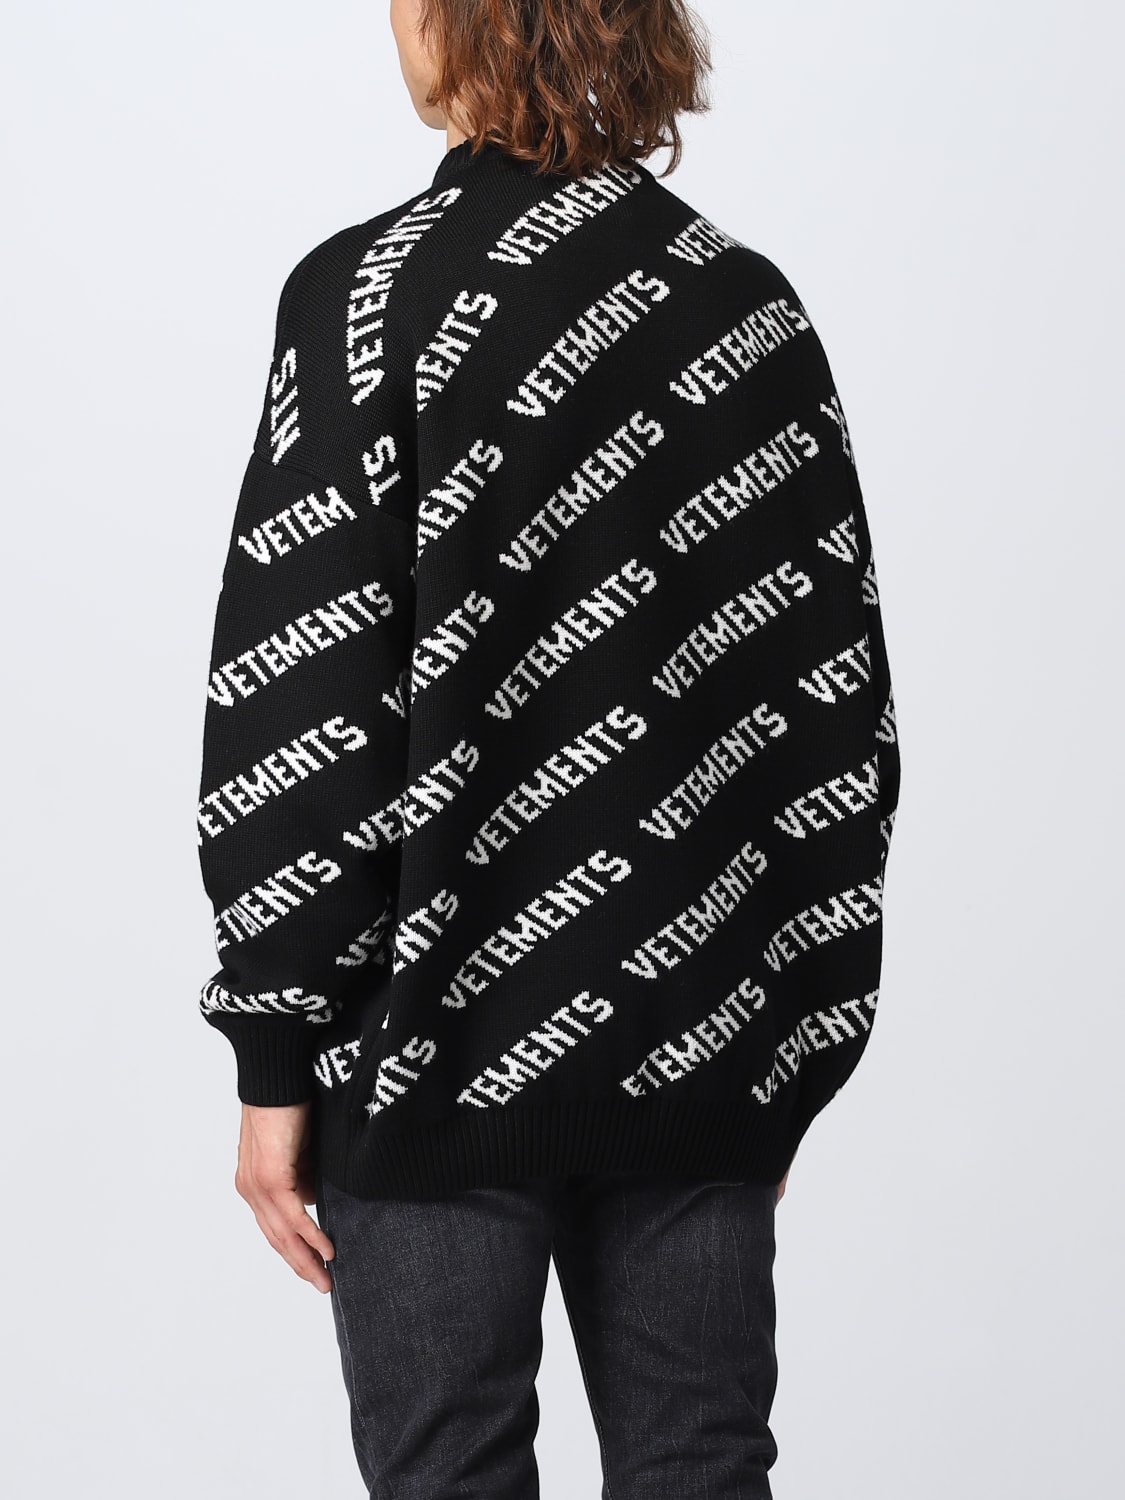 VETEMENTS Sweater in black/ white